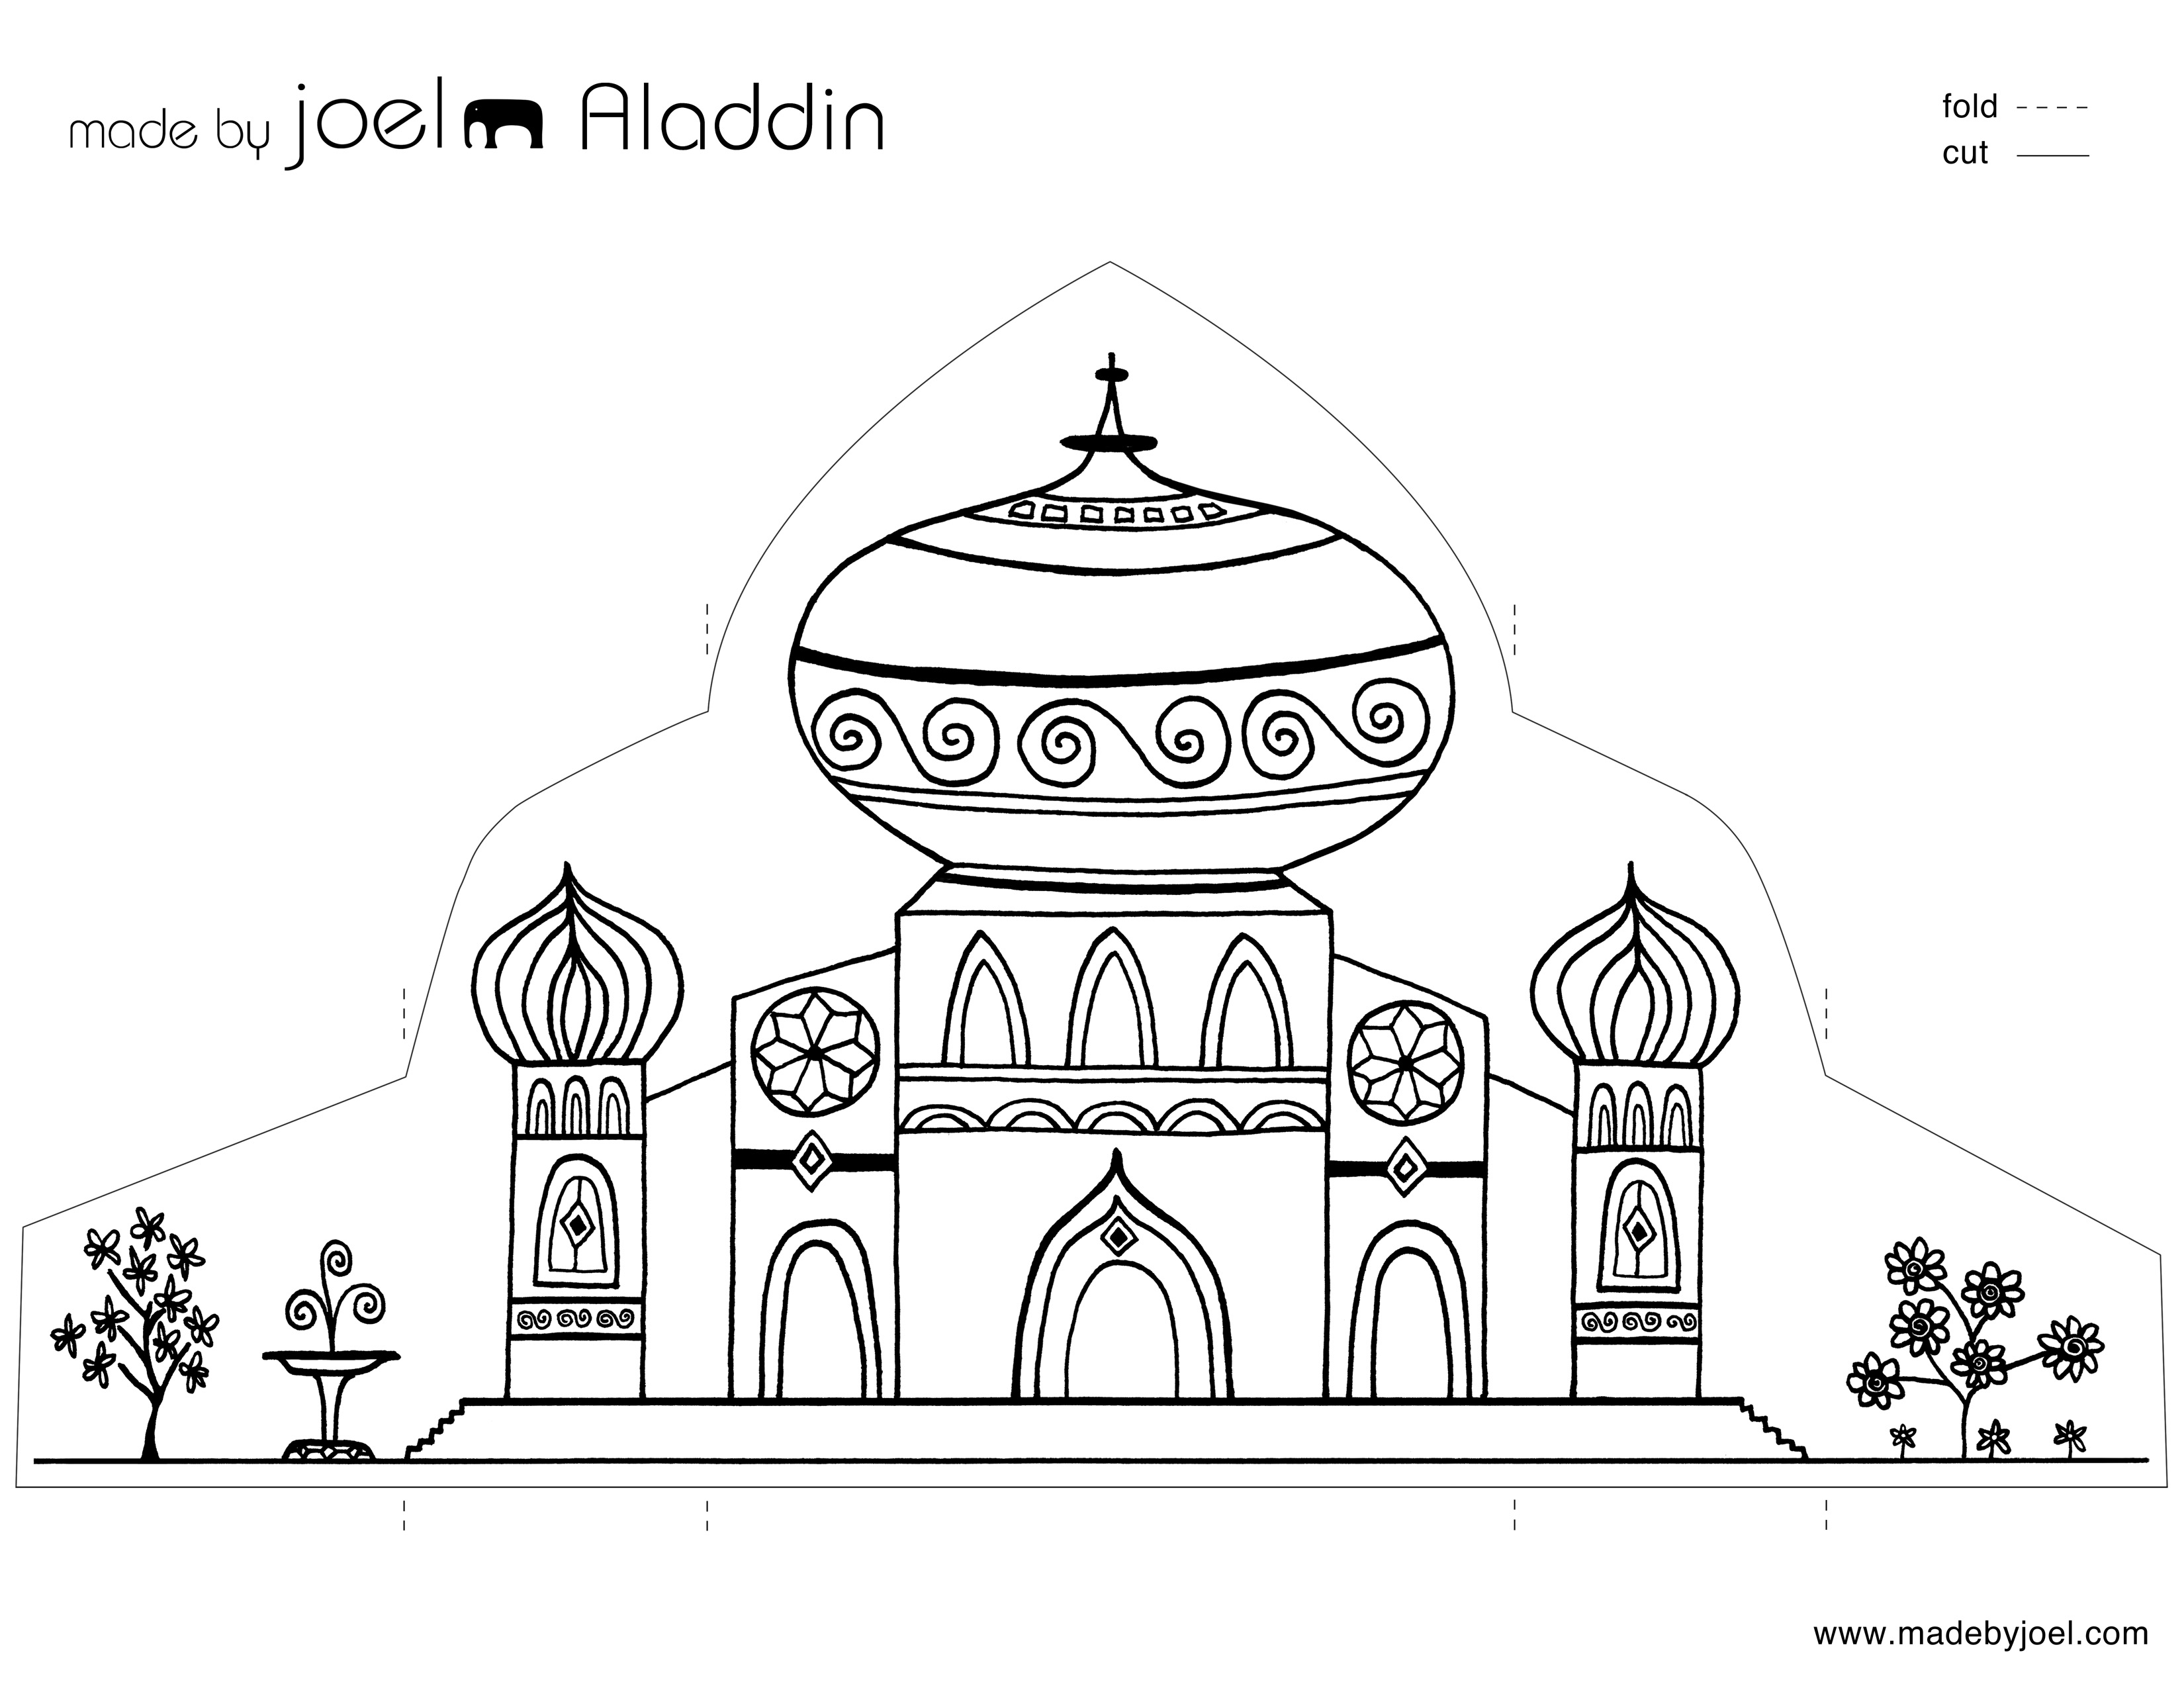 http://madebyjoel.com/wp-content/uploads/2014/02/Made-by-Joel-Aladdin-Paper-City-Template-1.jpg